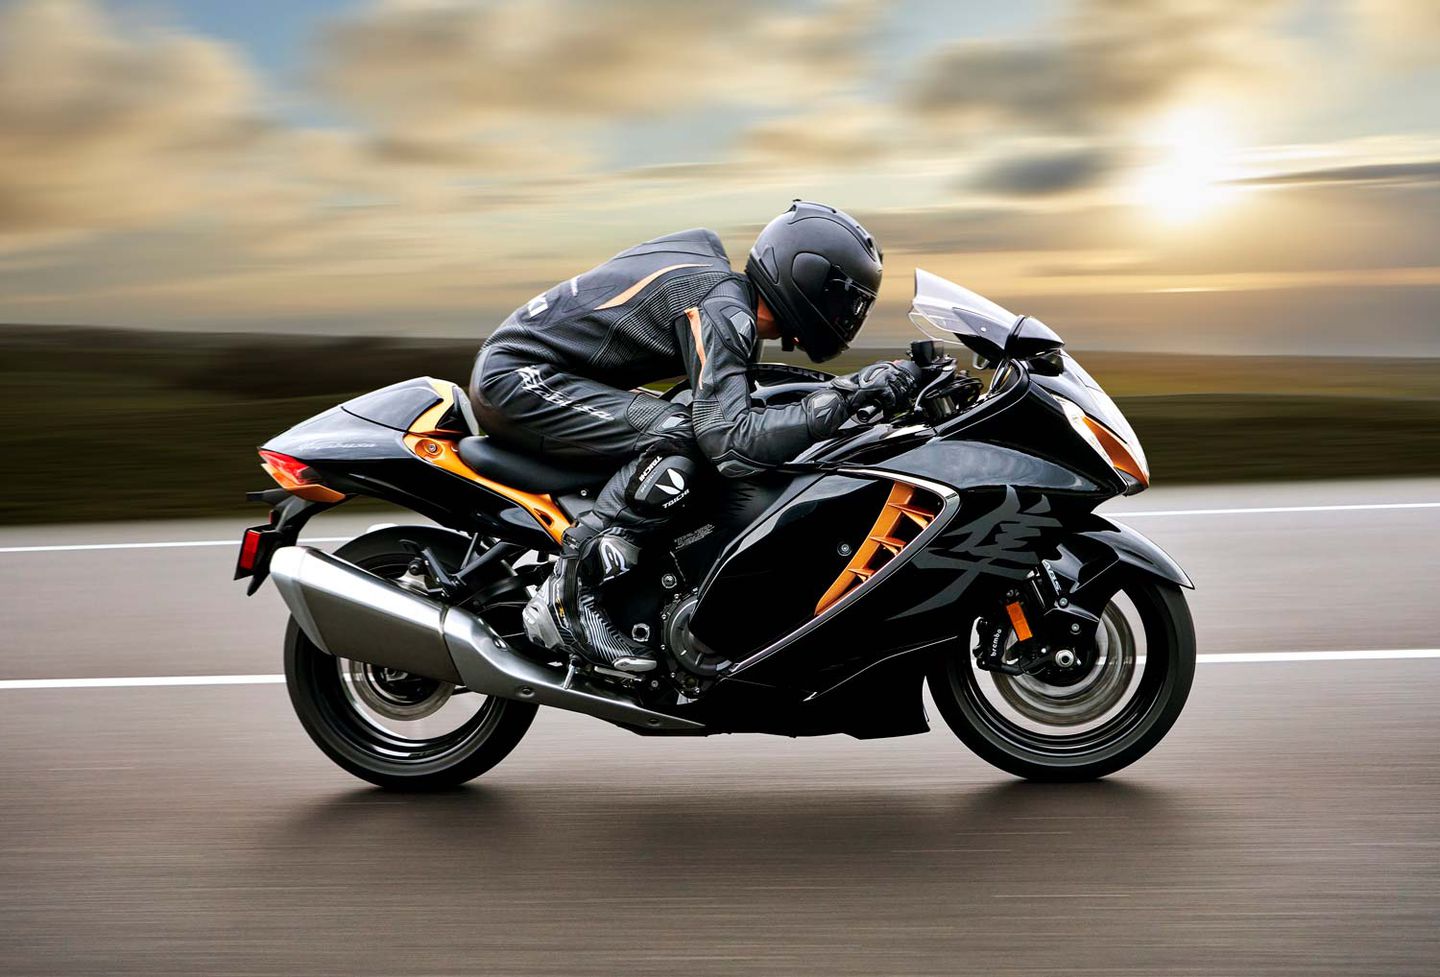 A rider on a Suzuki Hayabusa motorcycle speeds past the camera